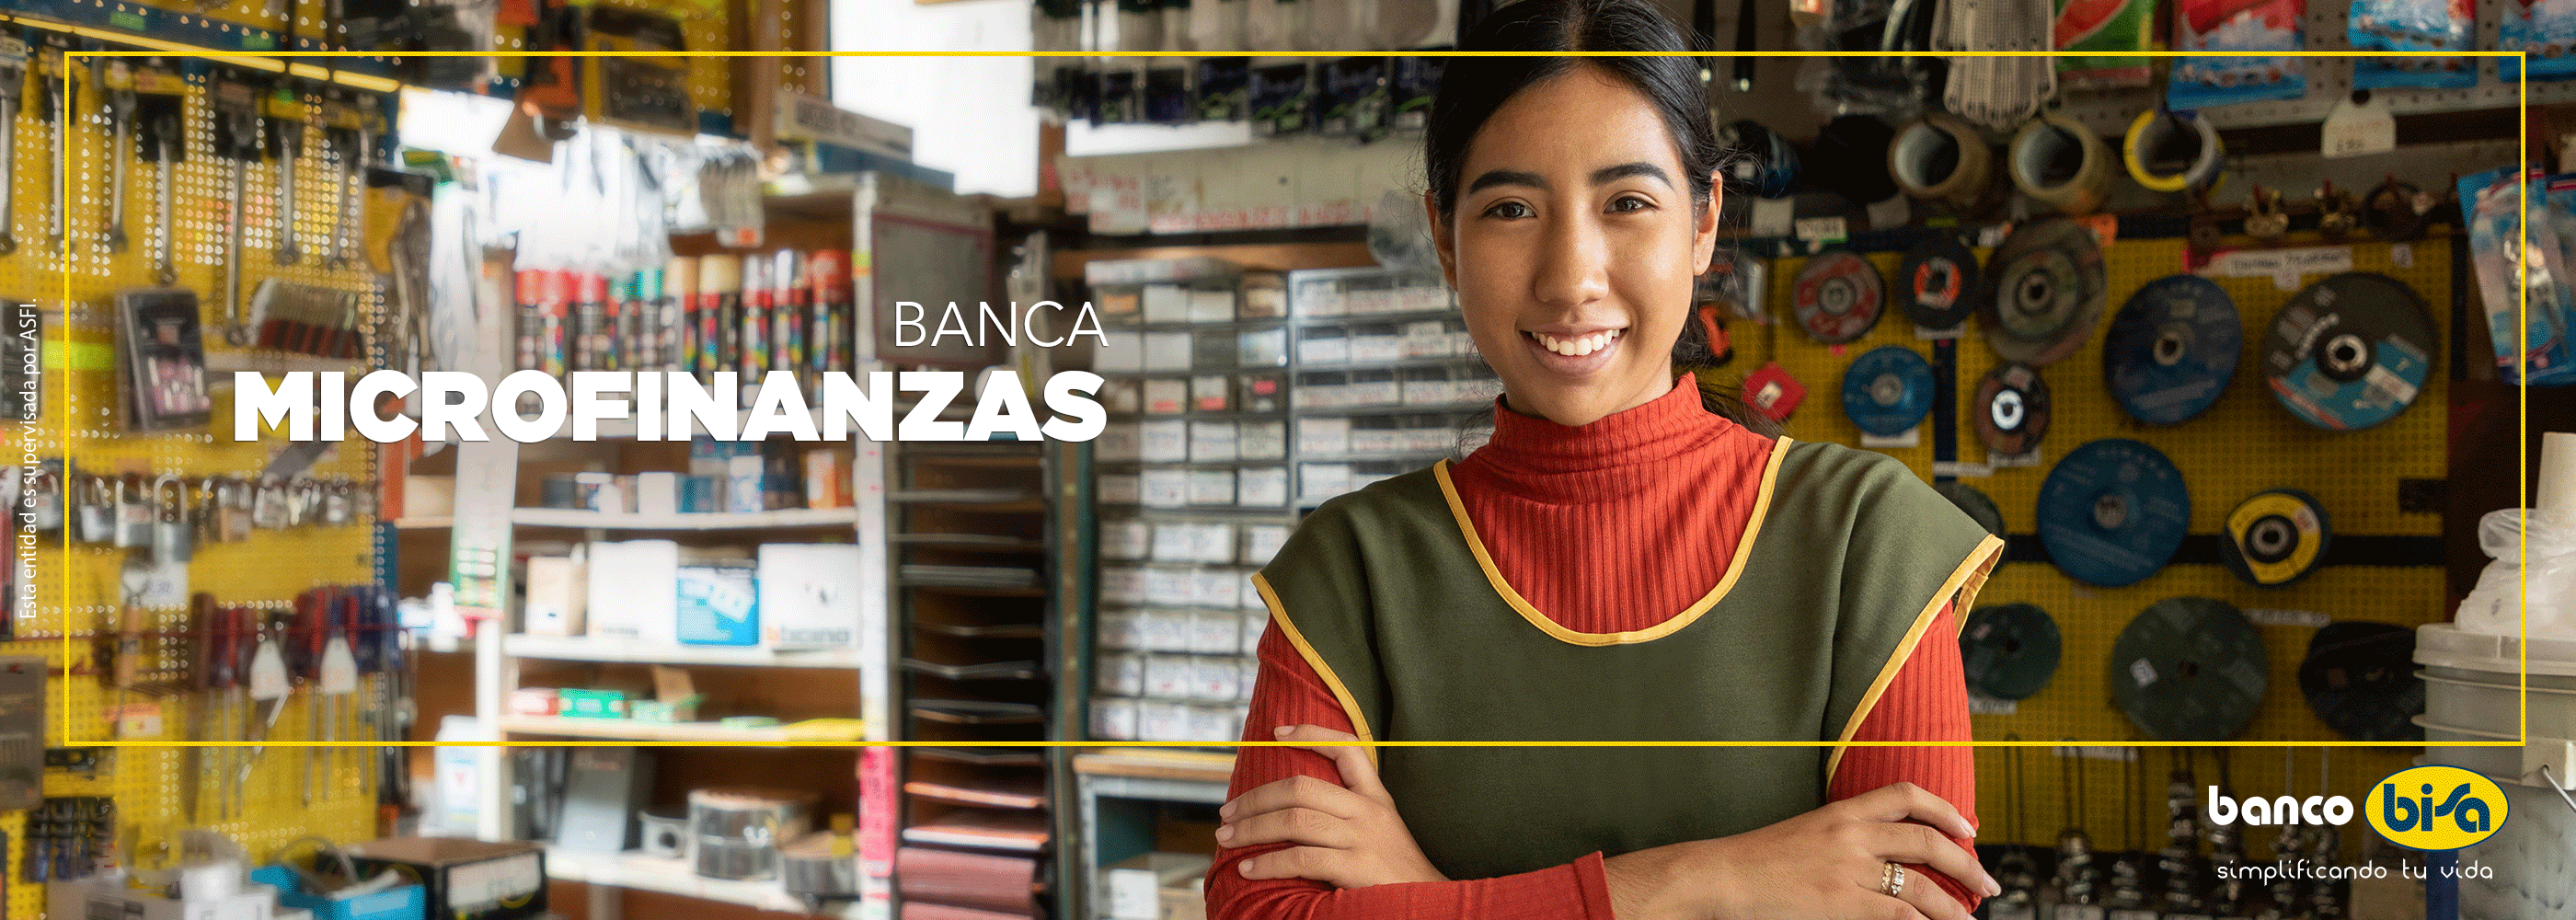 Banca-_Microfinanzas_2800x1000.png